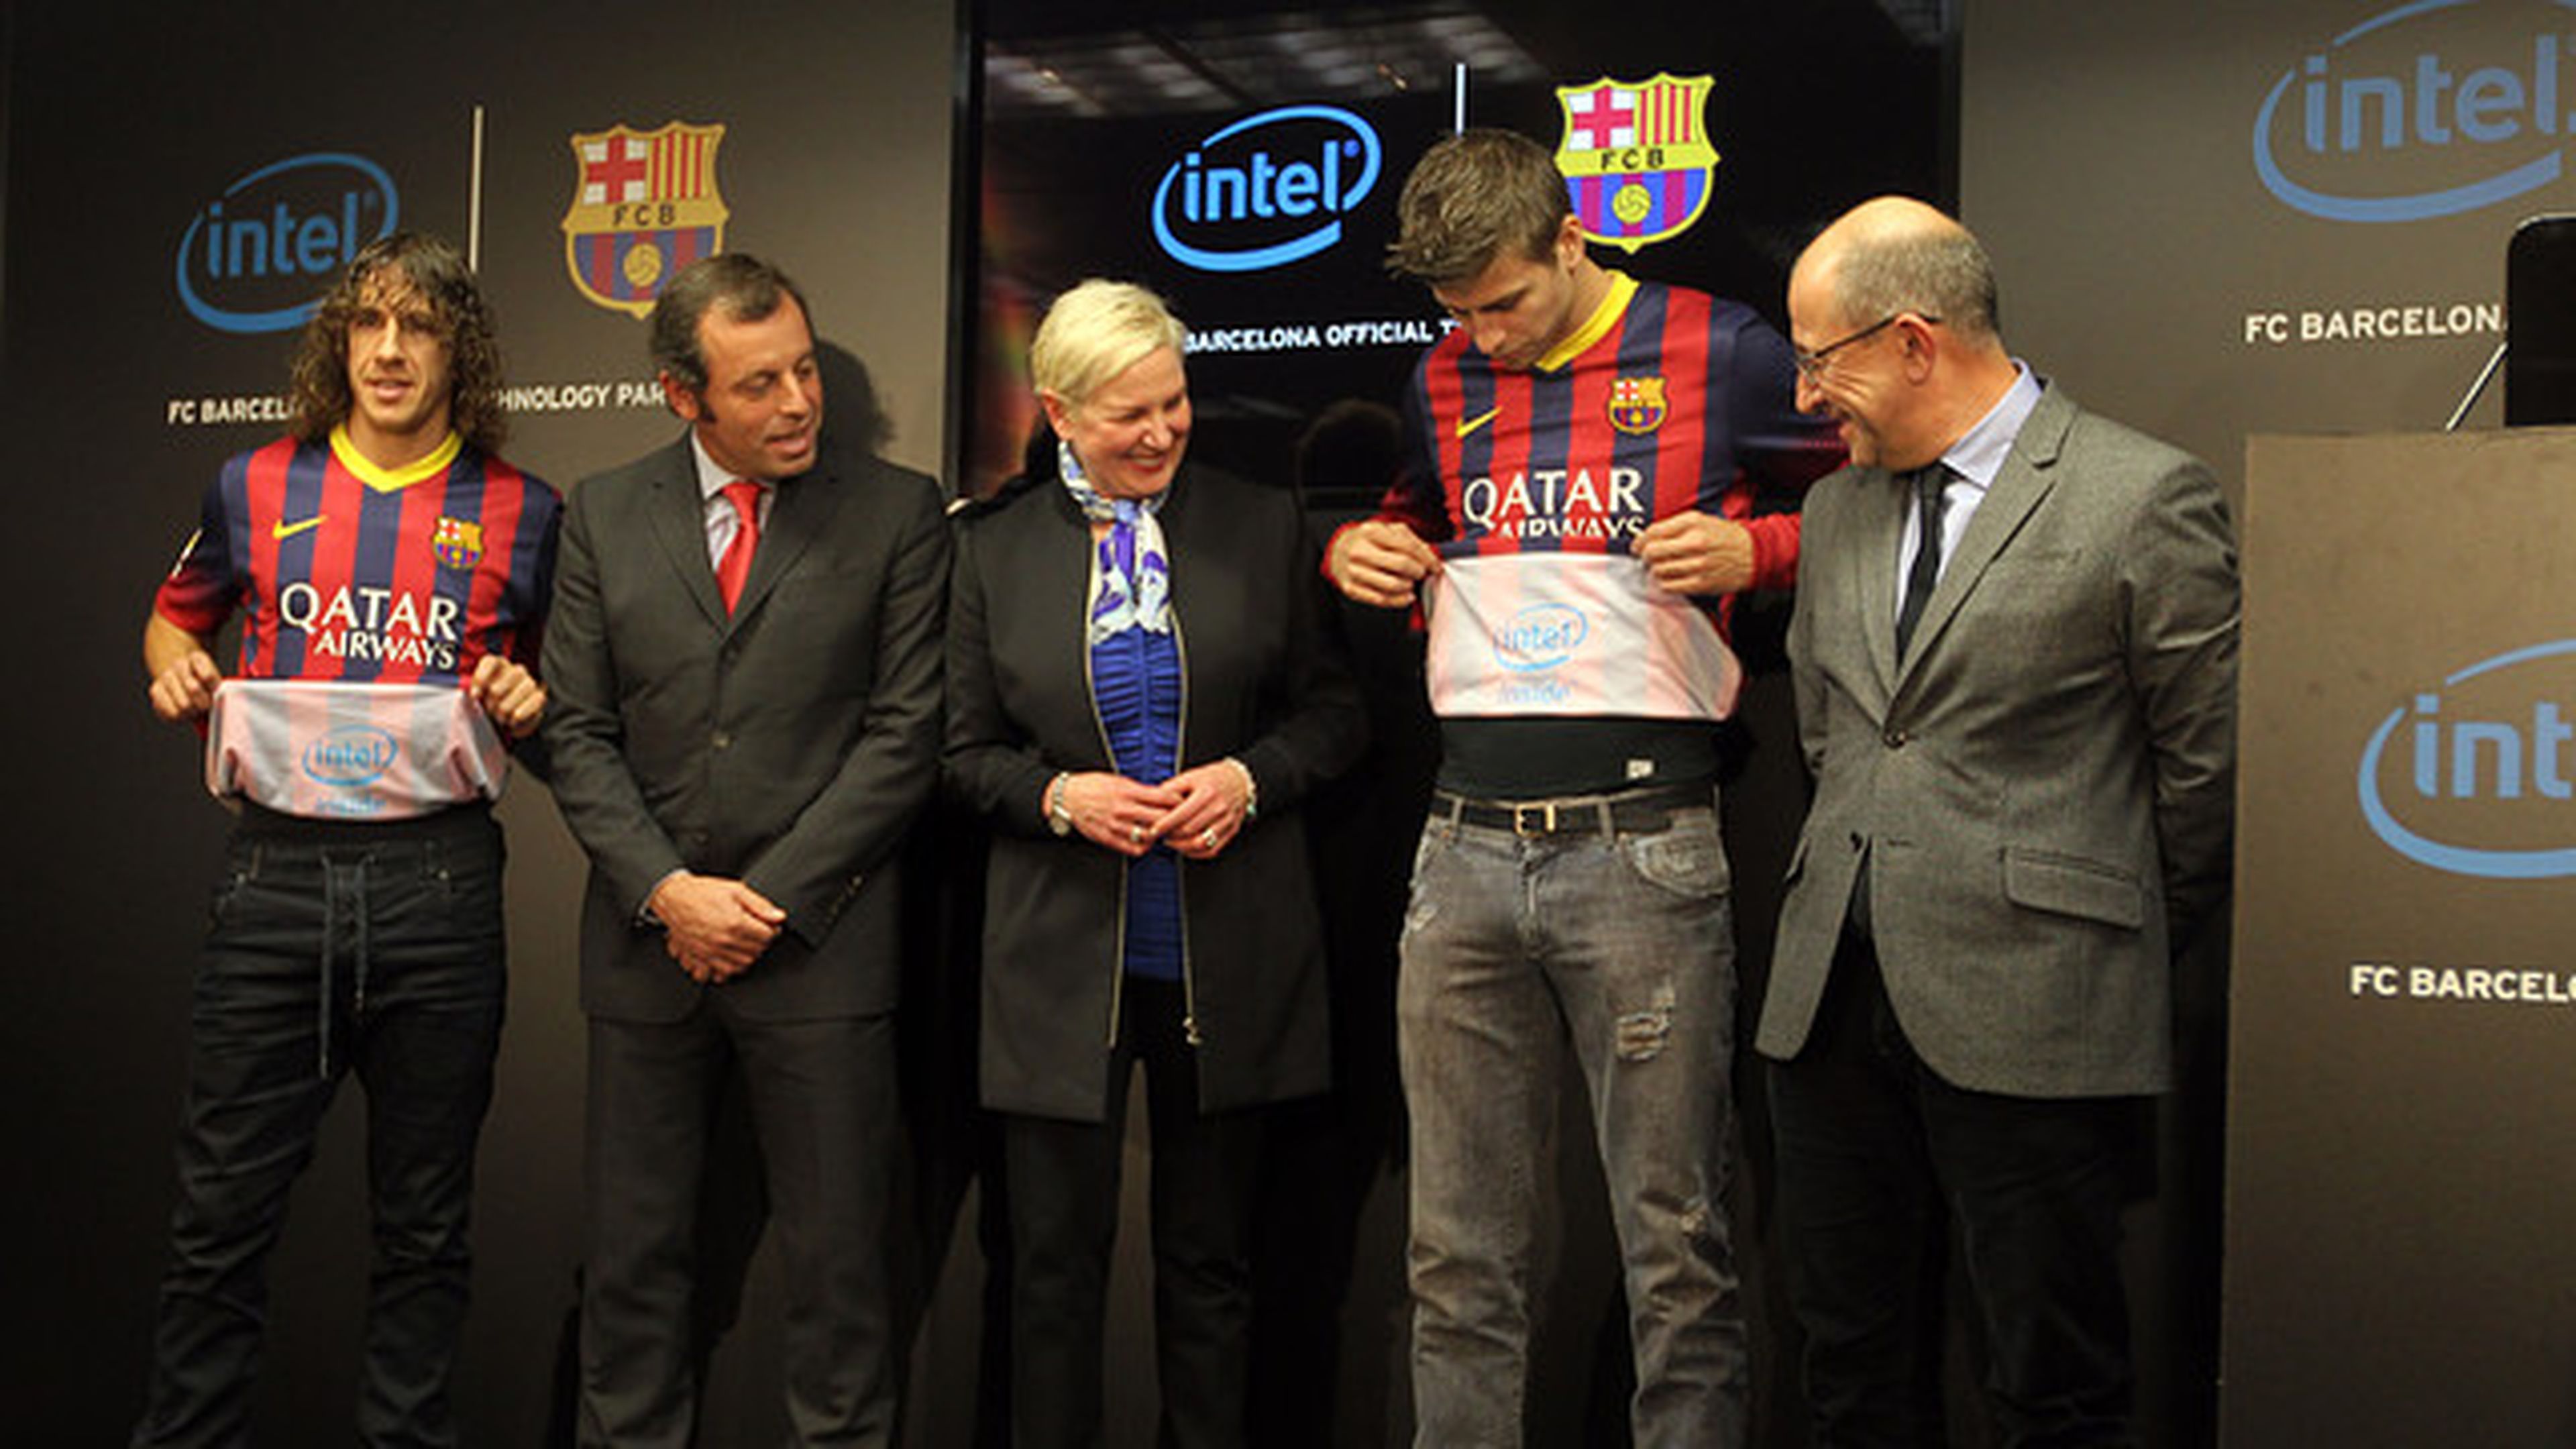 Intel FC Barcelona